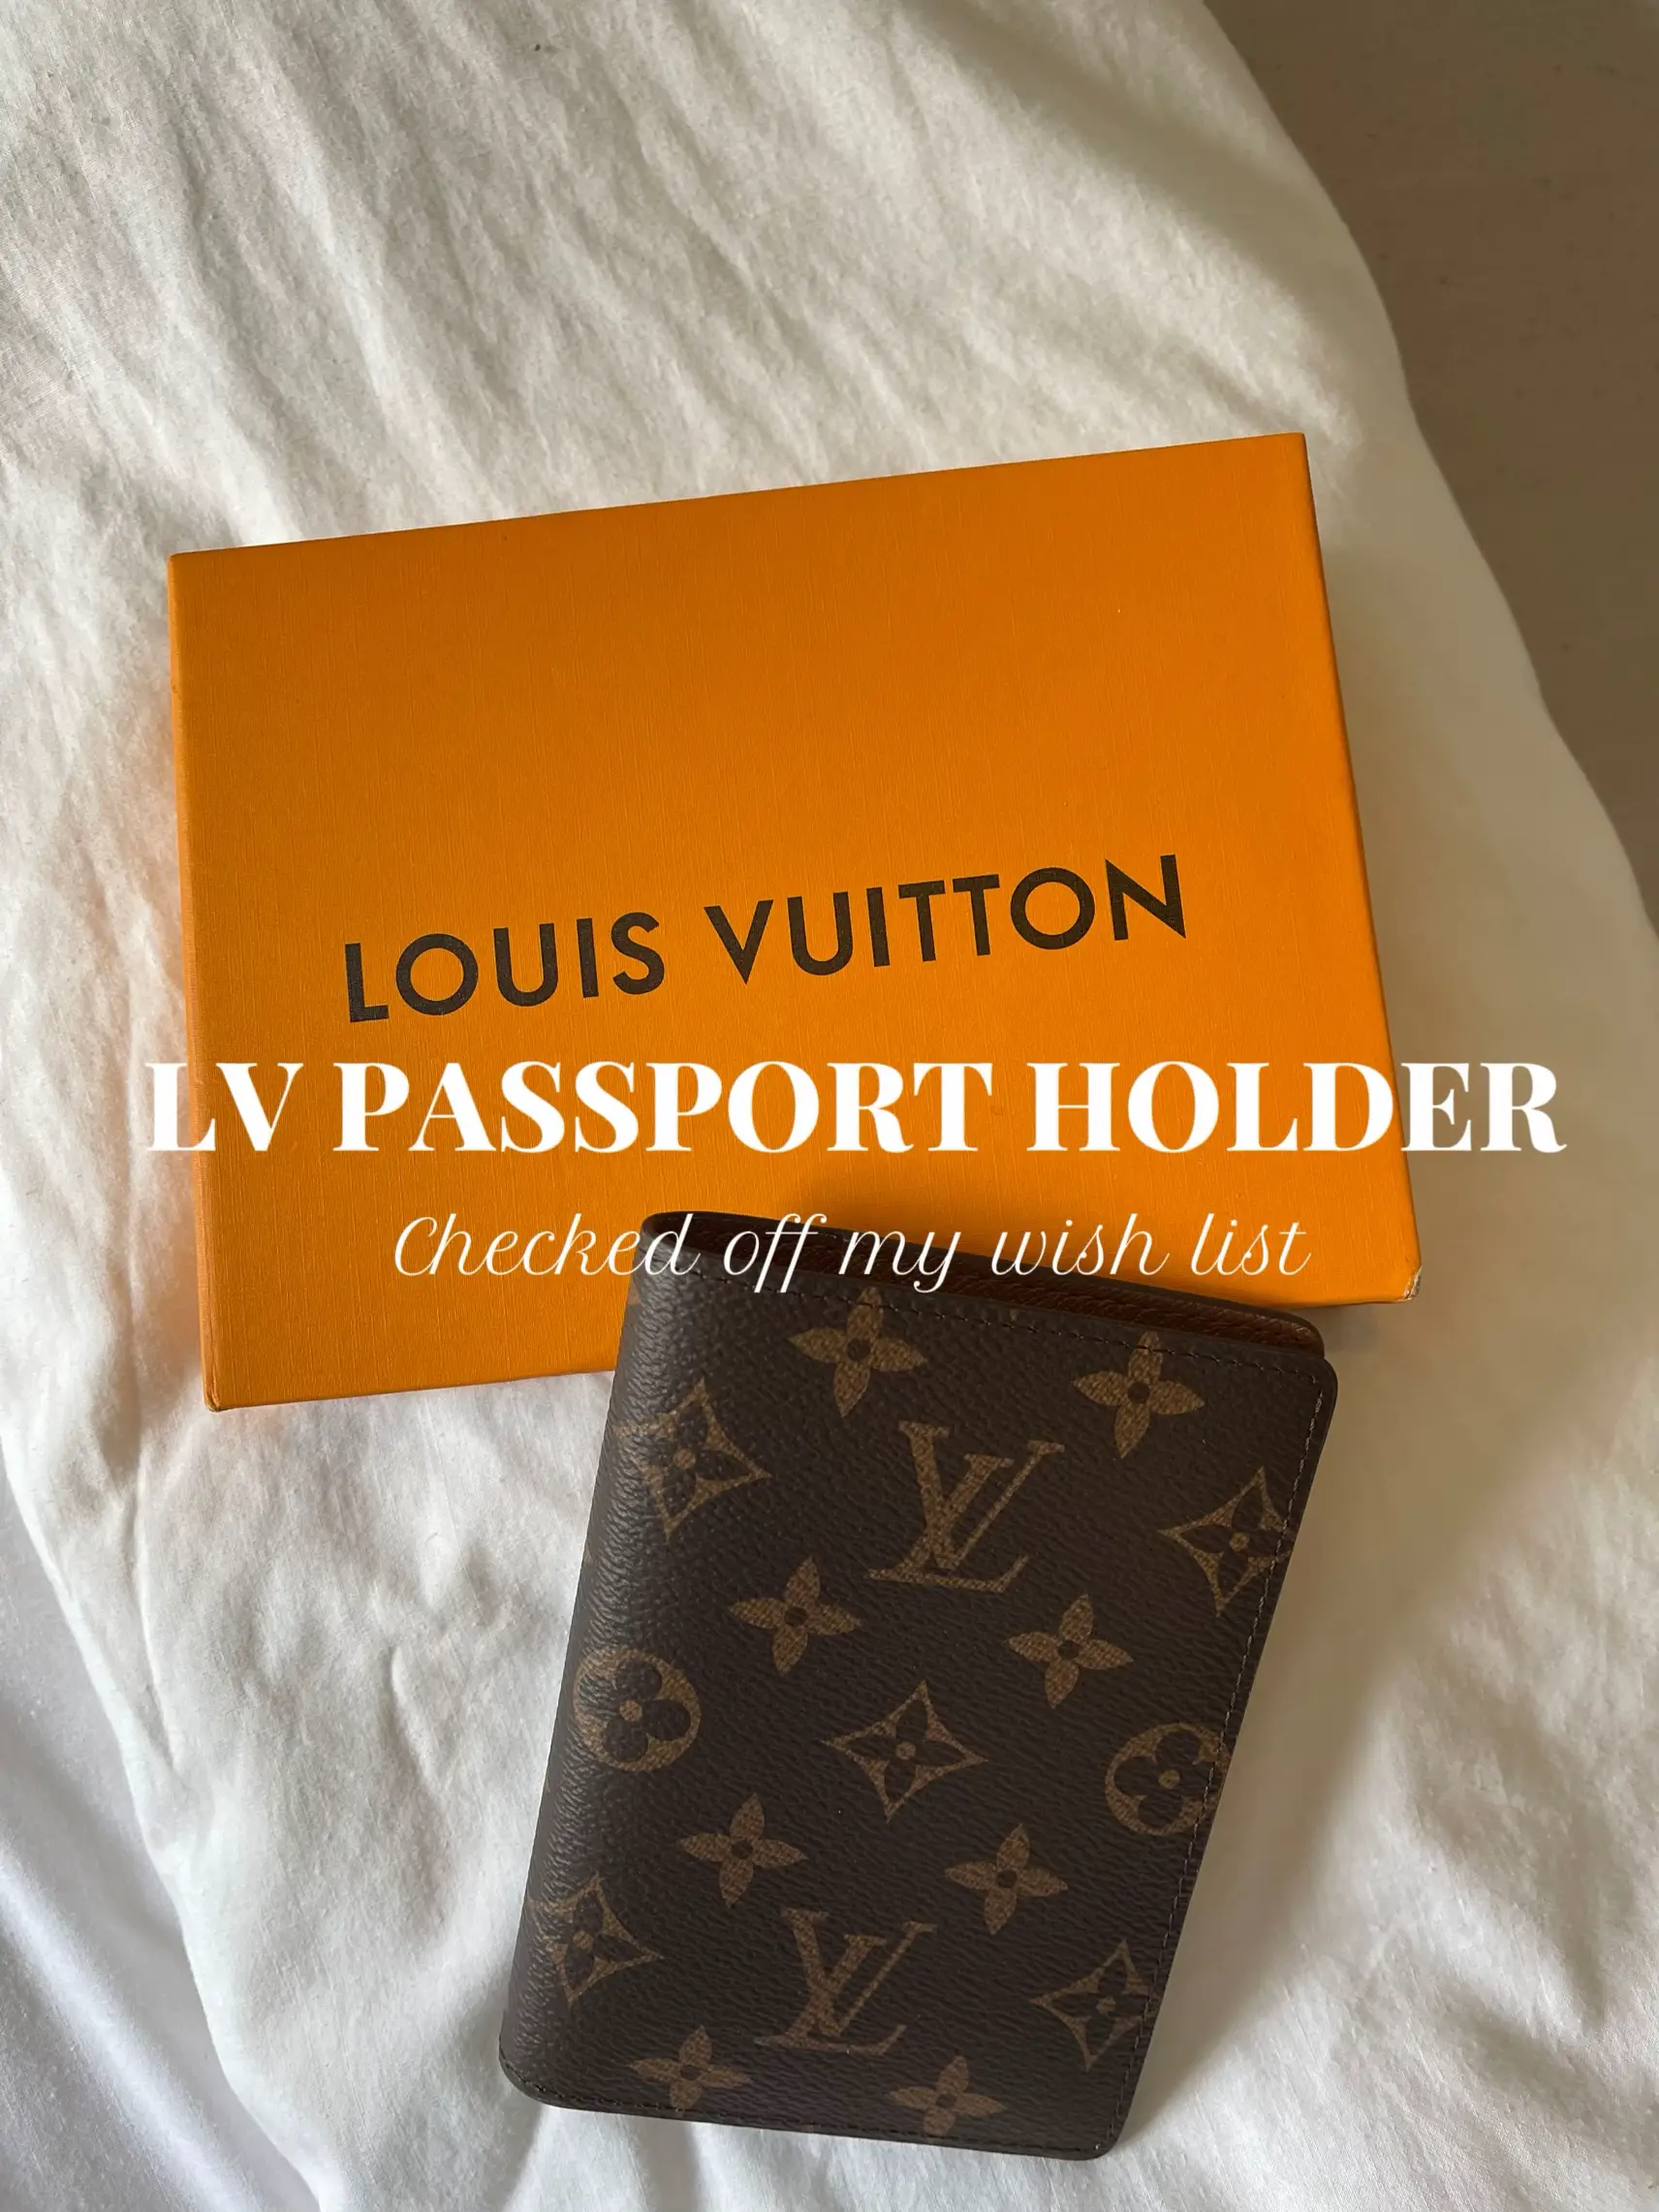 LOUIS VUITTON - passport holder, Gallery posted by Emma Eva